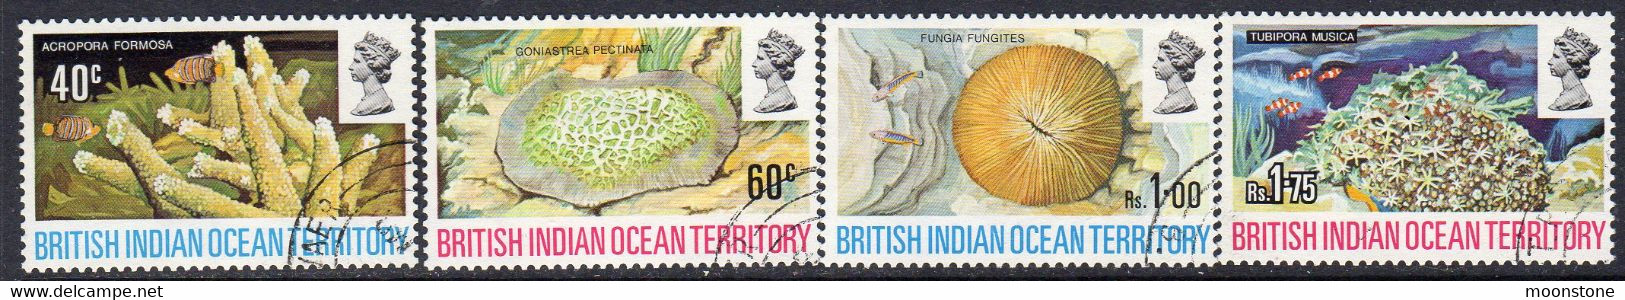 British Indian Ocean Territory BIOT 1972 Corals Set Of 4, Used, SG 41/4 (A) - British Indian Ocean Territory (BIOT)